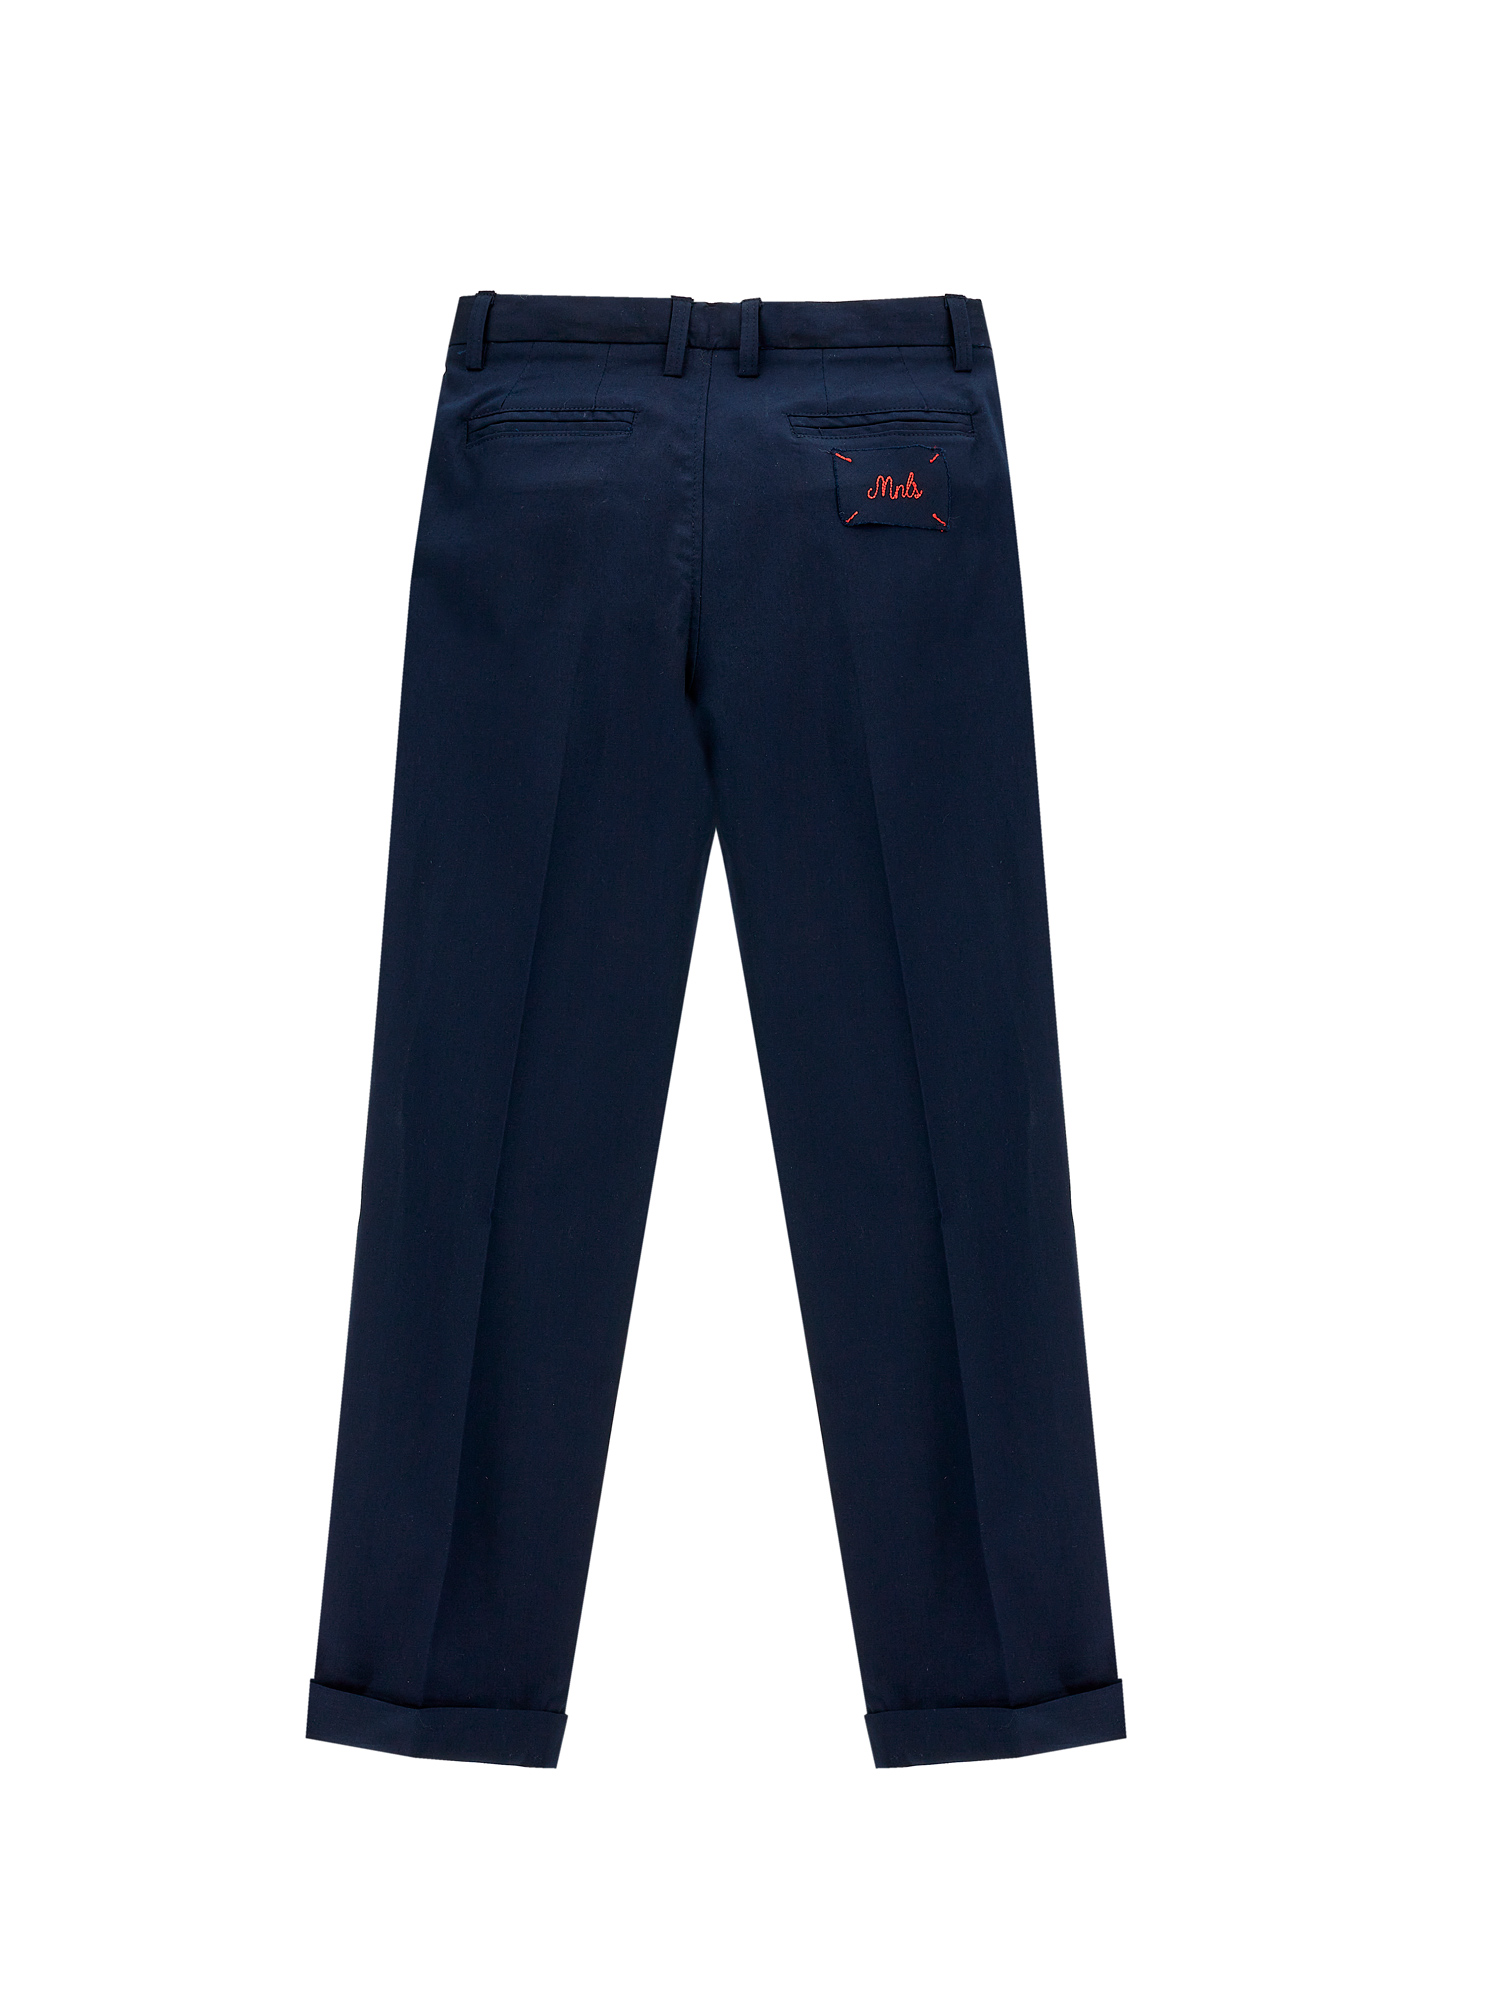 Shop Monnalisa Classic Gabardine Trousers In Dark Blue